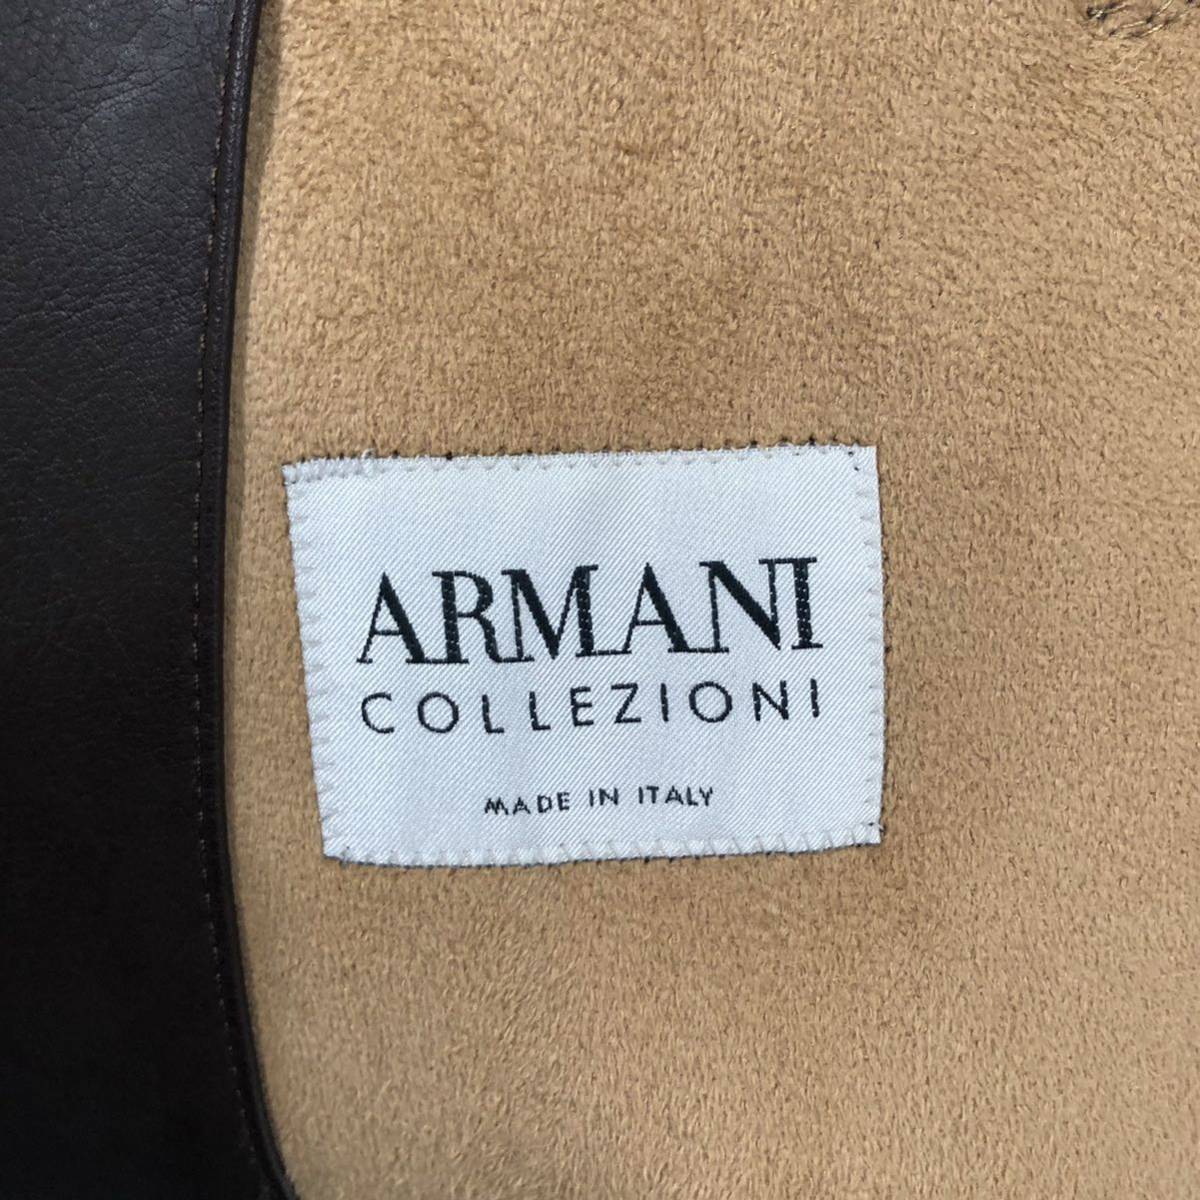  прекрасный товар Armani koretso-niARMANI COLLEZIONI кожаный жакет кожа пальто Brown 52 размер XL размер большой размер 